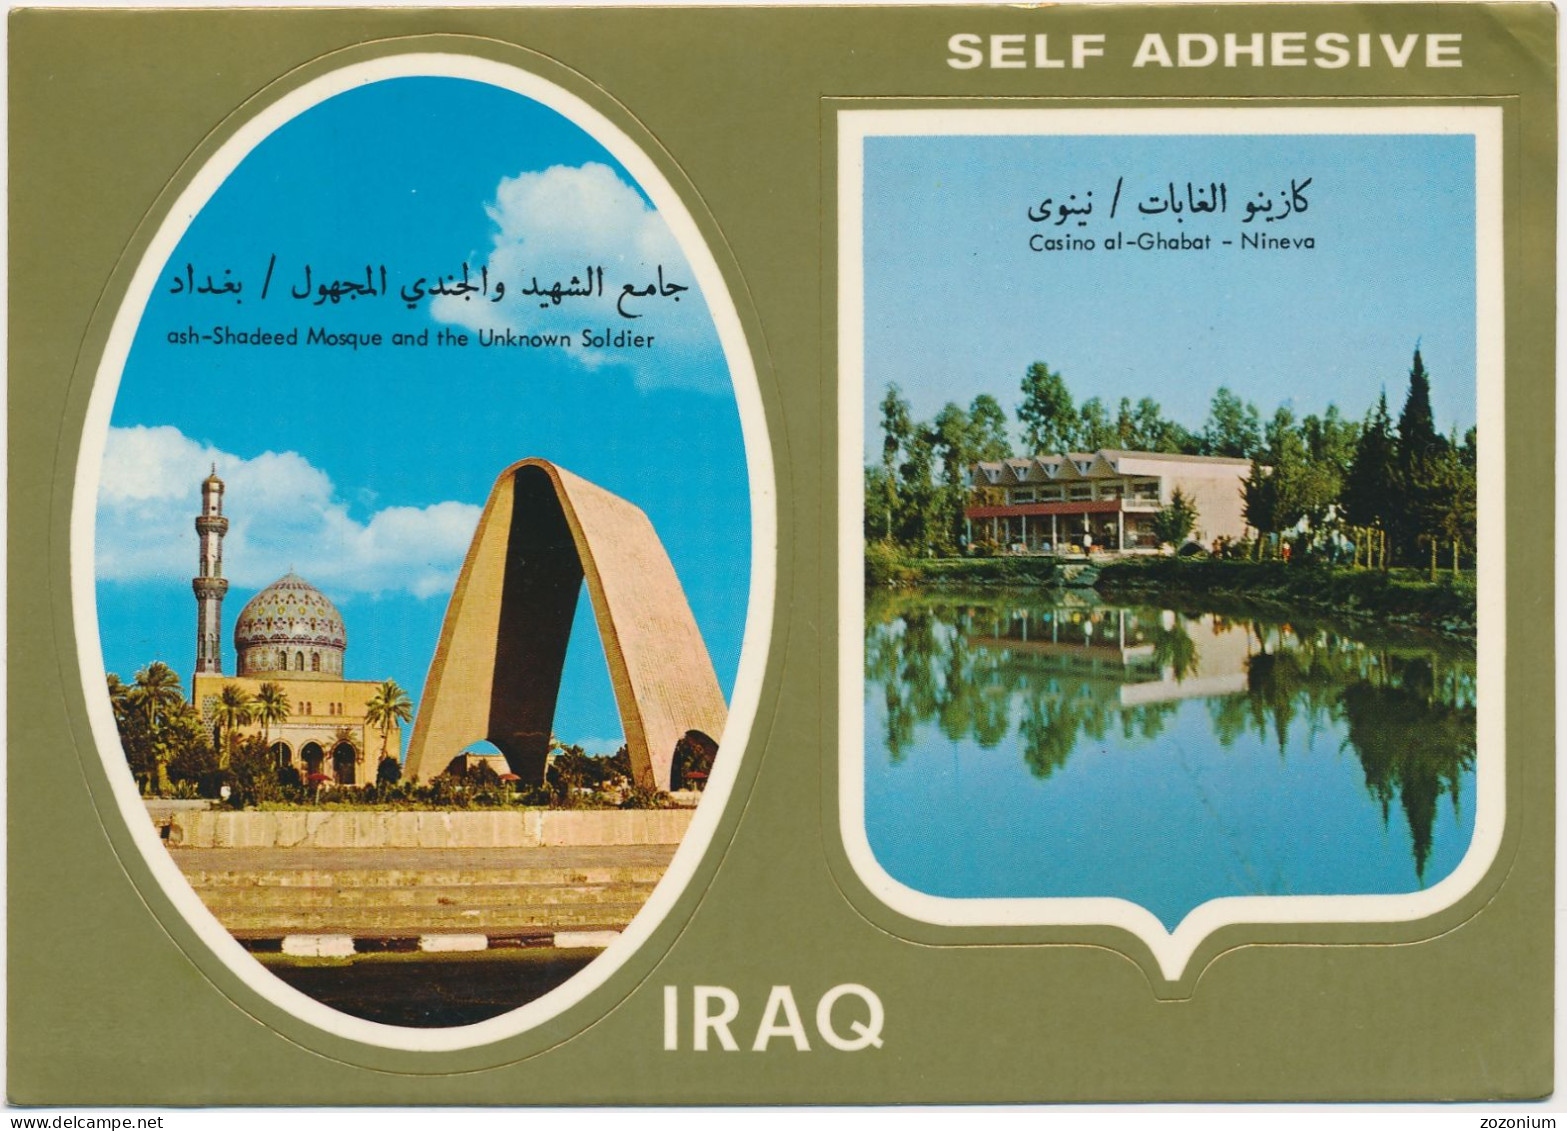 IRAQ  Baghdad Mosque Unknone Soldier - 1982 Stamp, Nineva Stickers, Label, Vintage Photo Postcard Rppc Pc - Irak